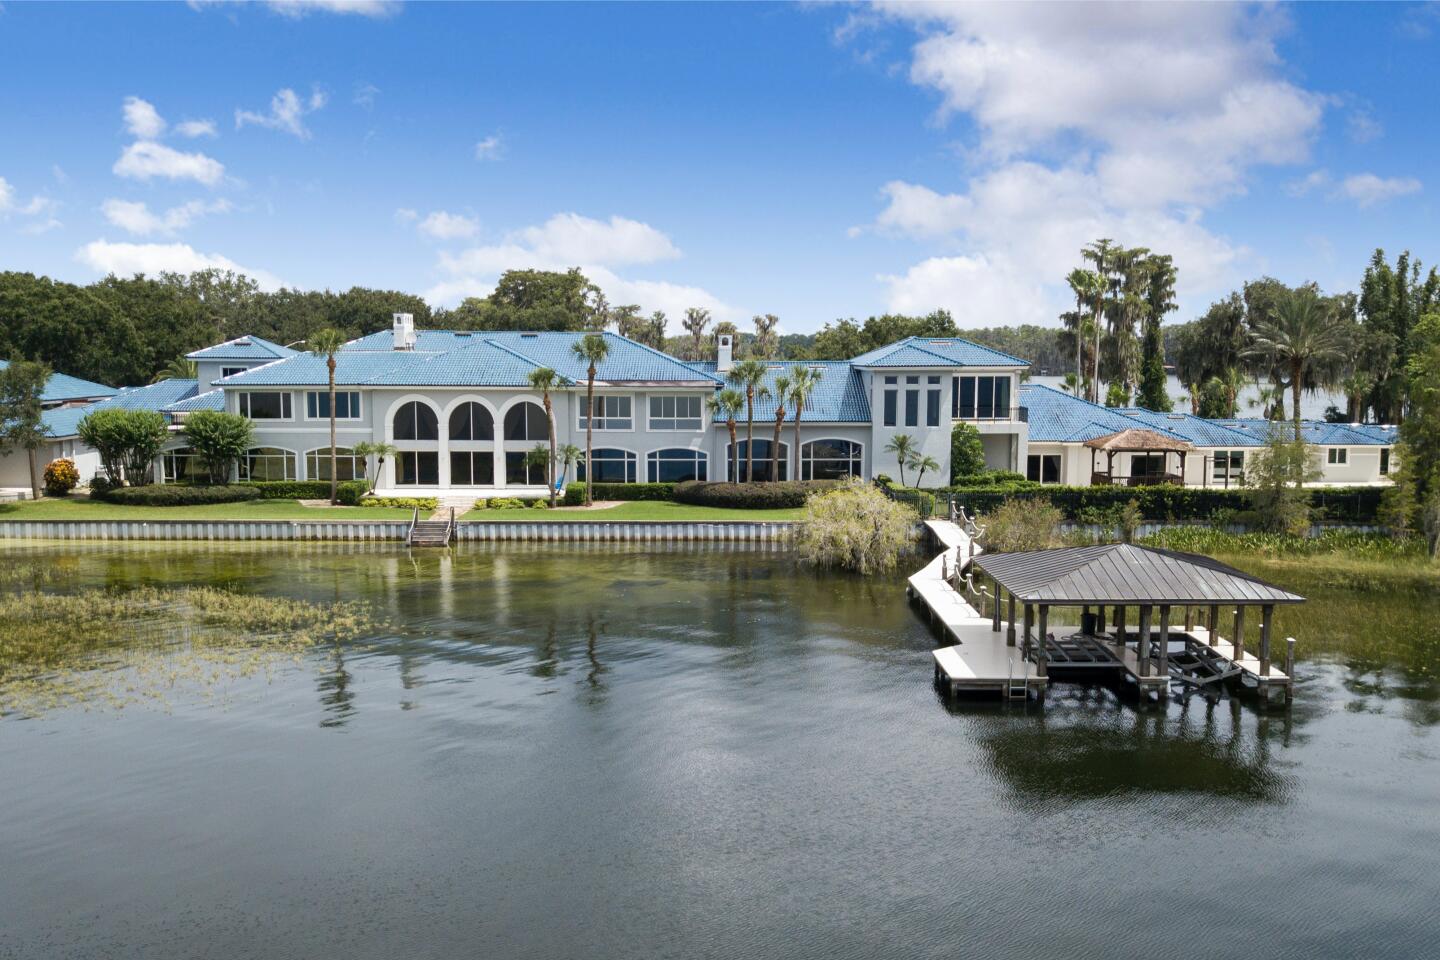 Shaq's Florida estate: the dock